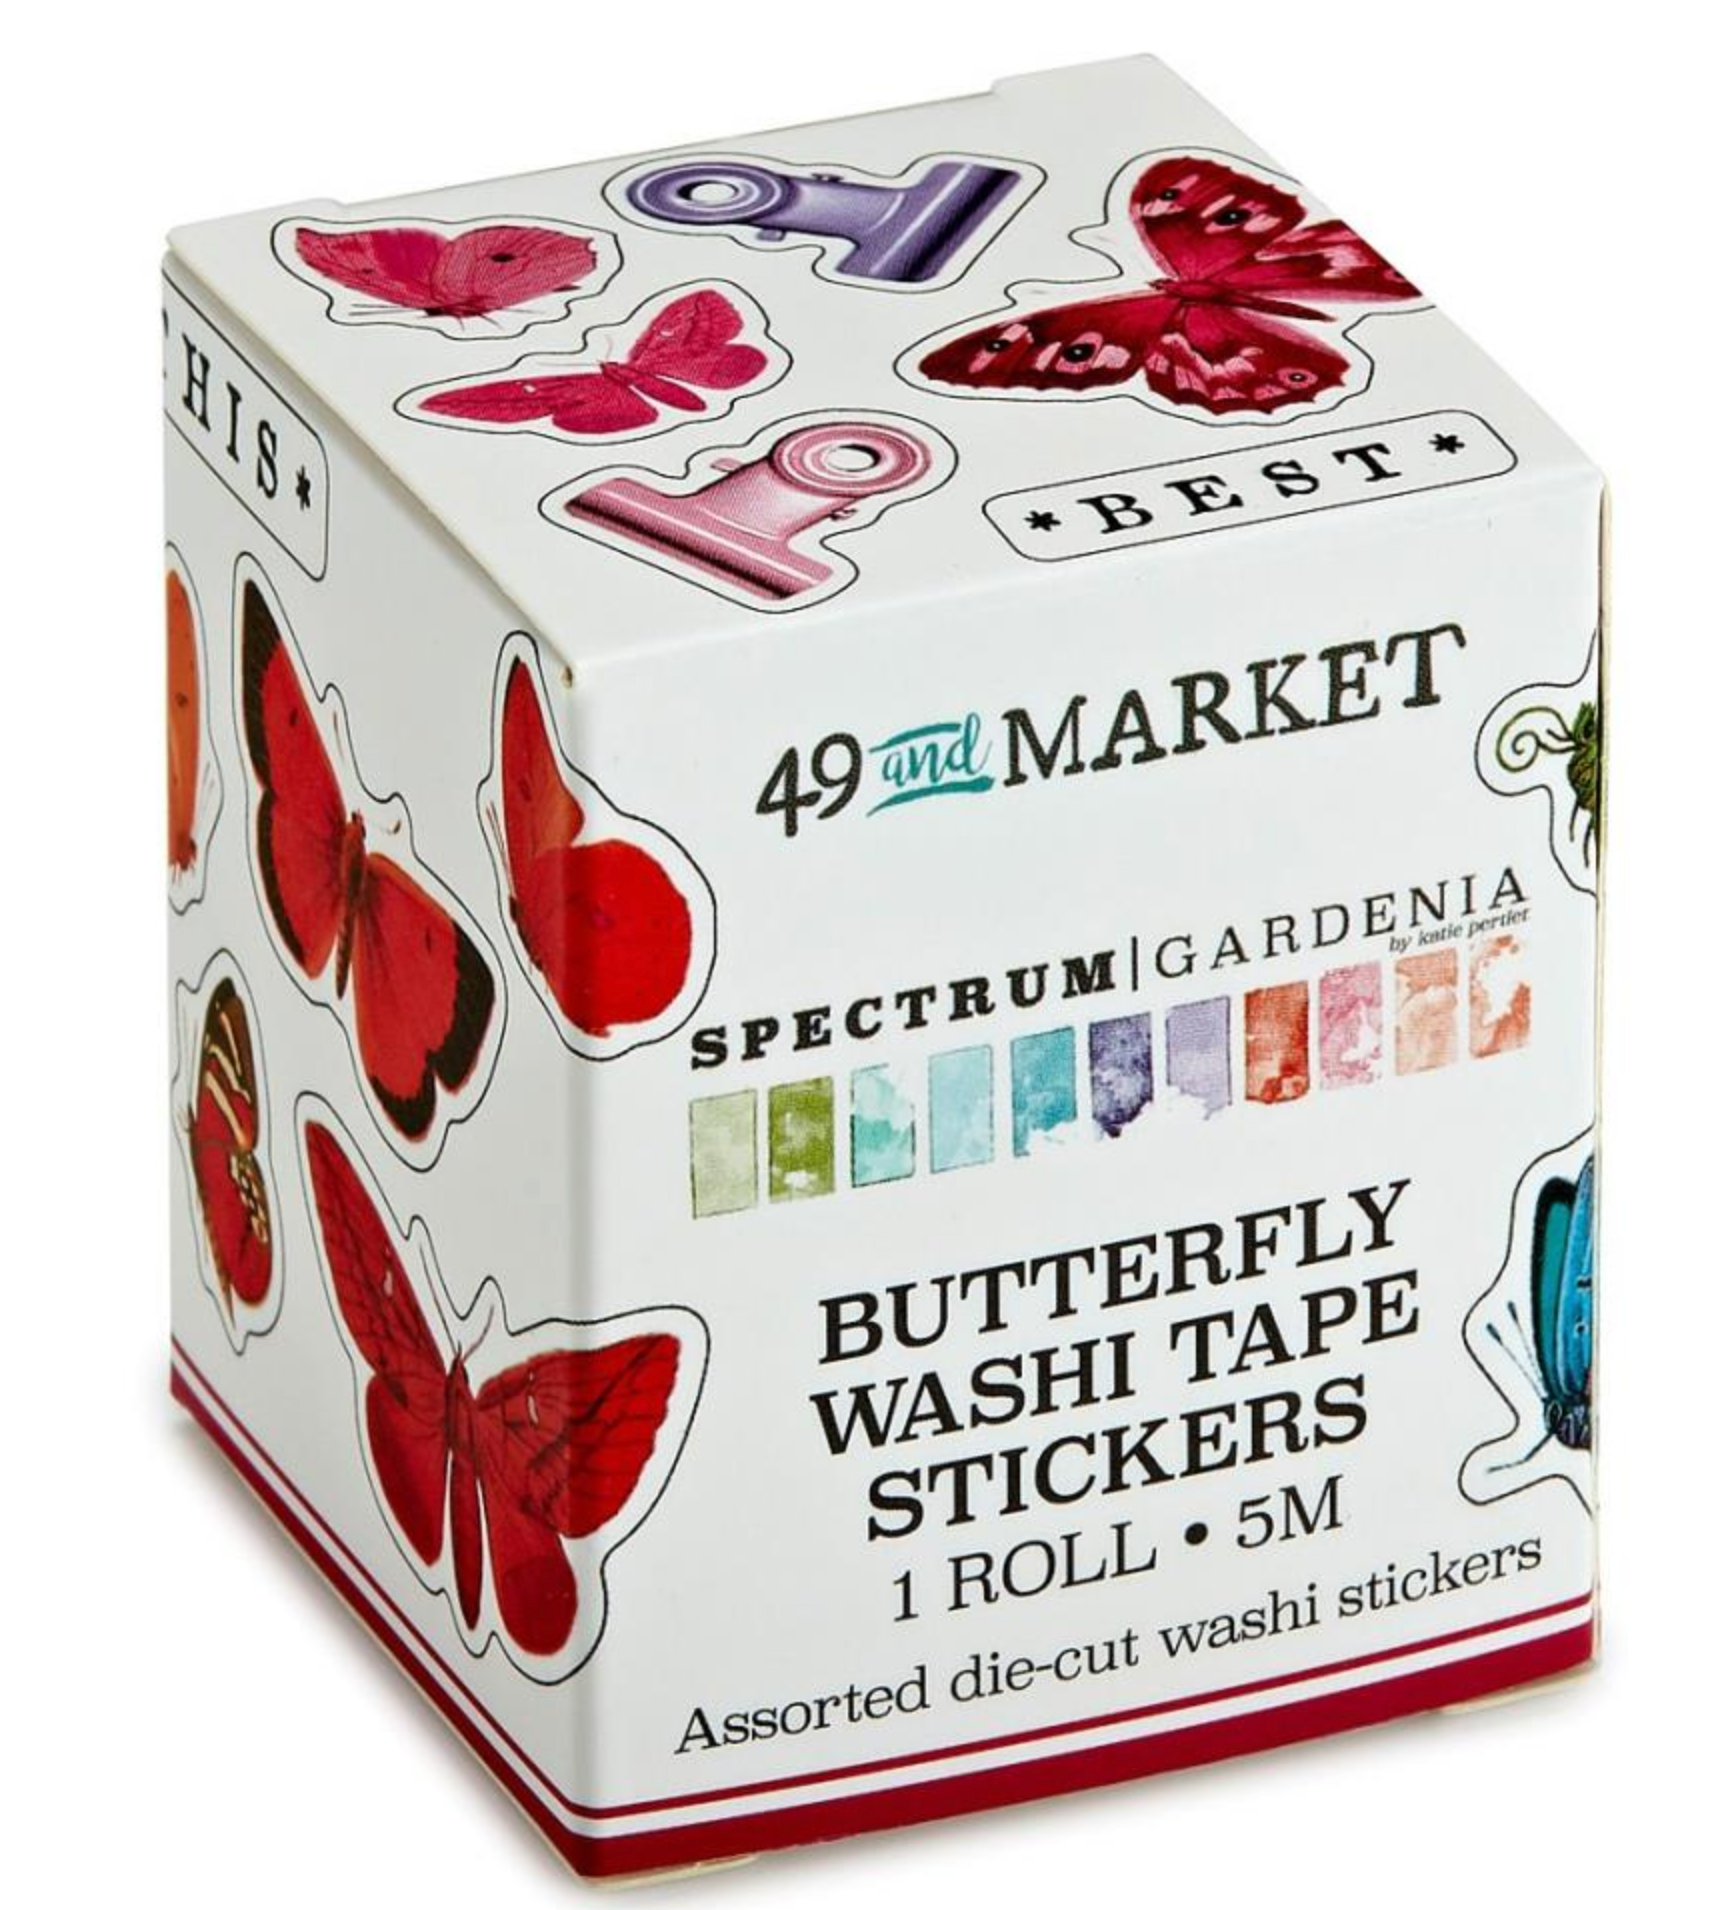 49 & Market Spectrum Gardenia Washi Sticker Roll Butterfly